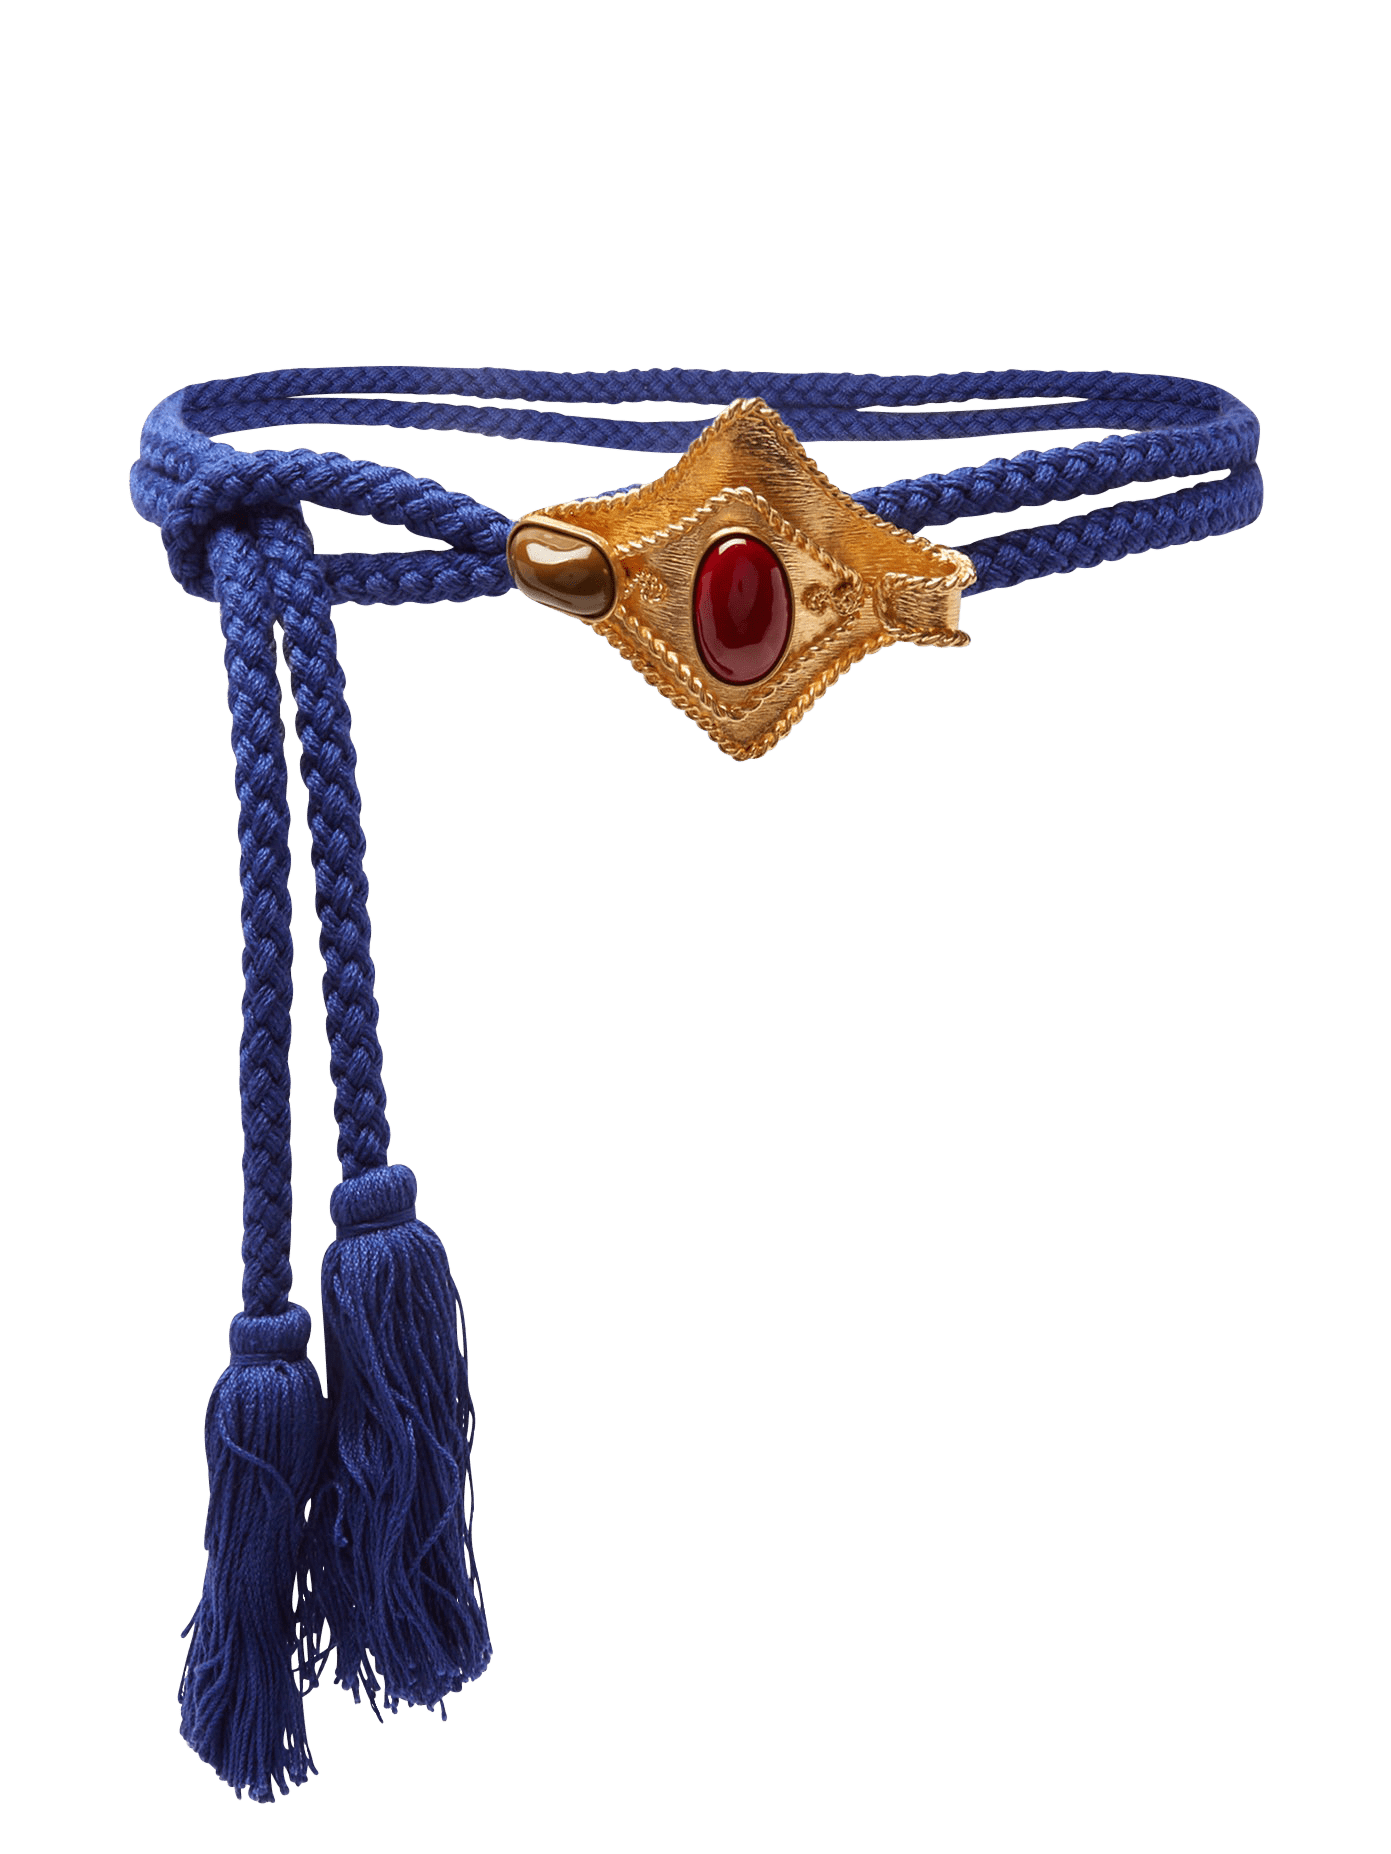 Manta Rope Belt Proto-type Belt Sonia Petroff 